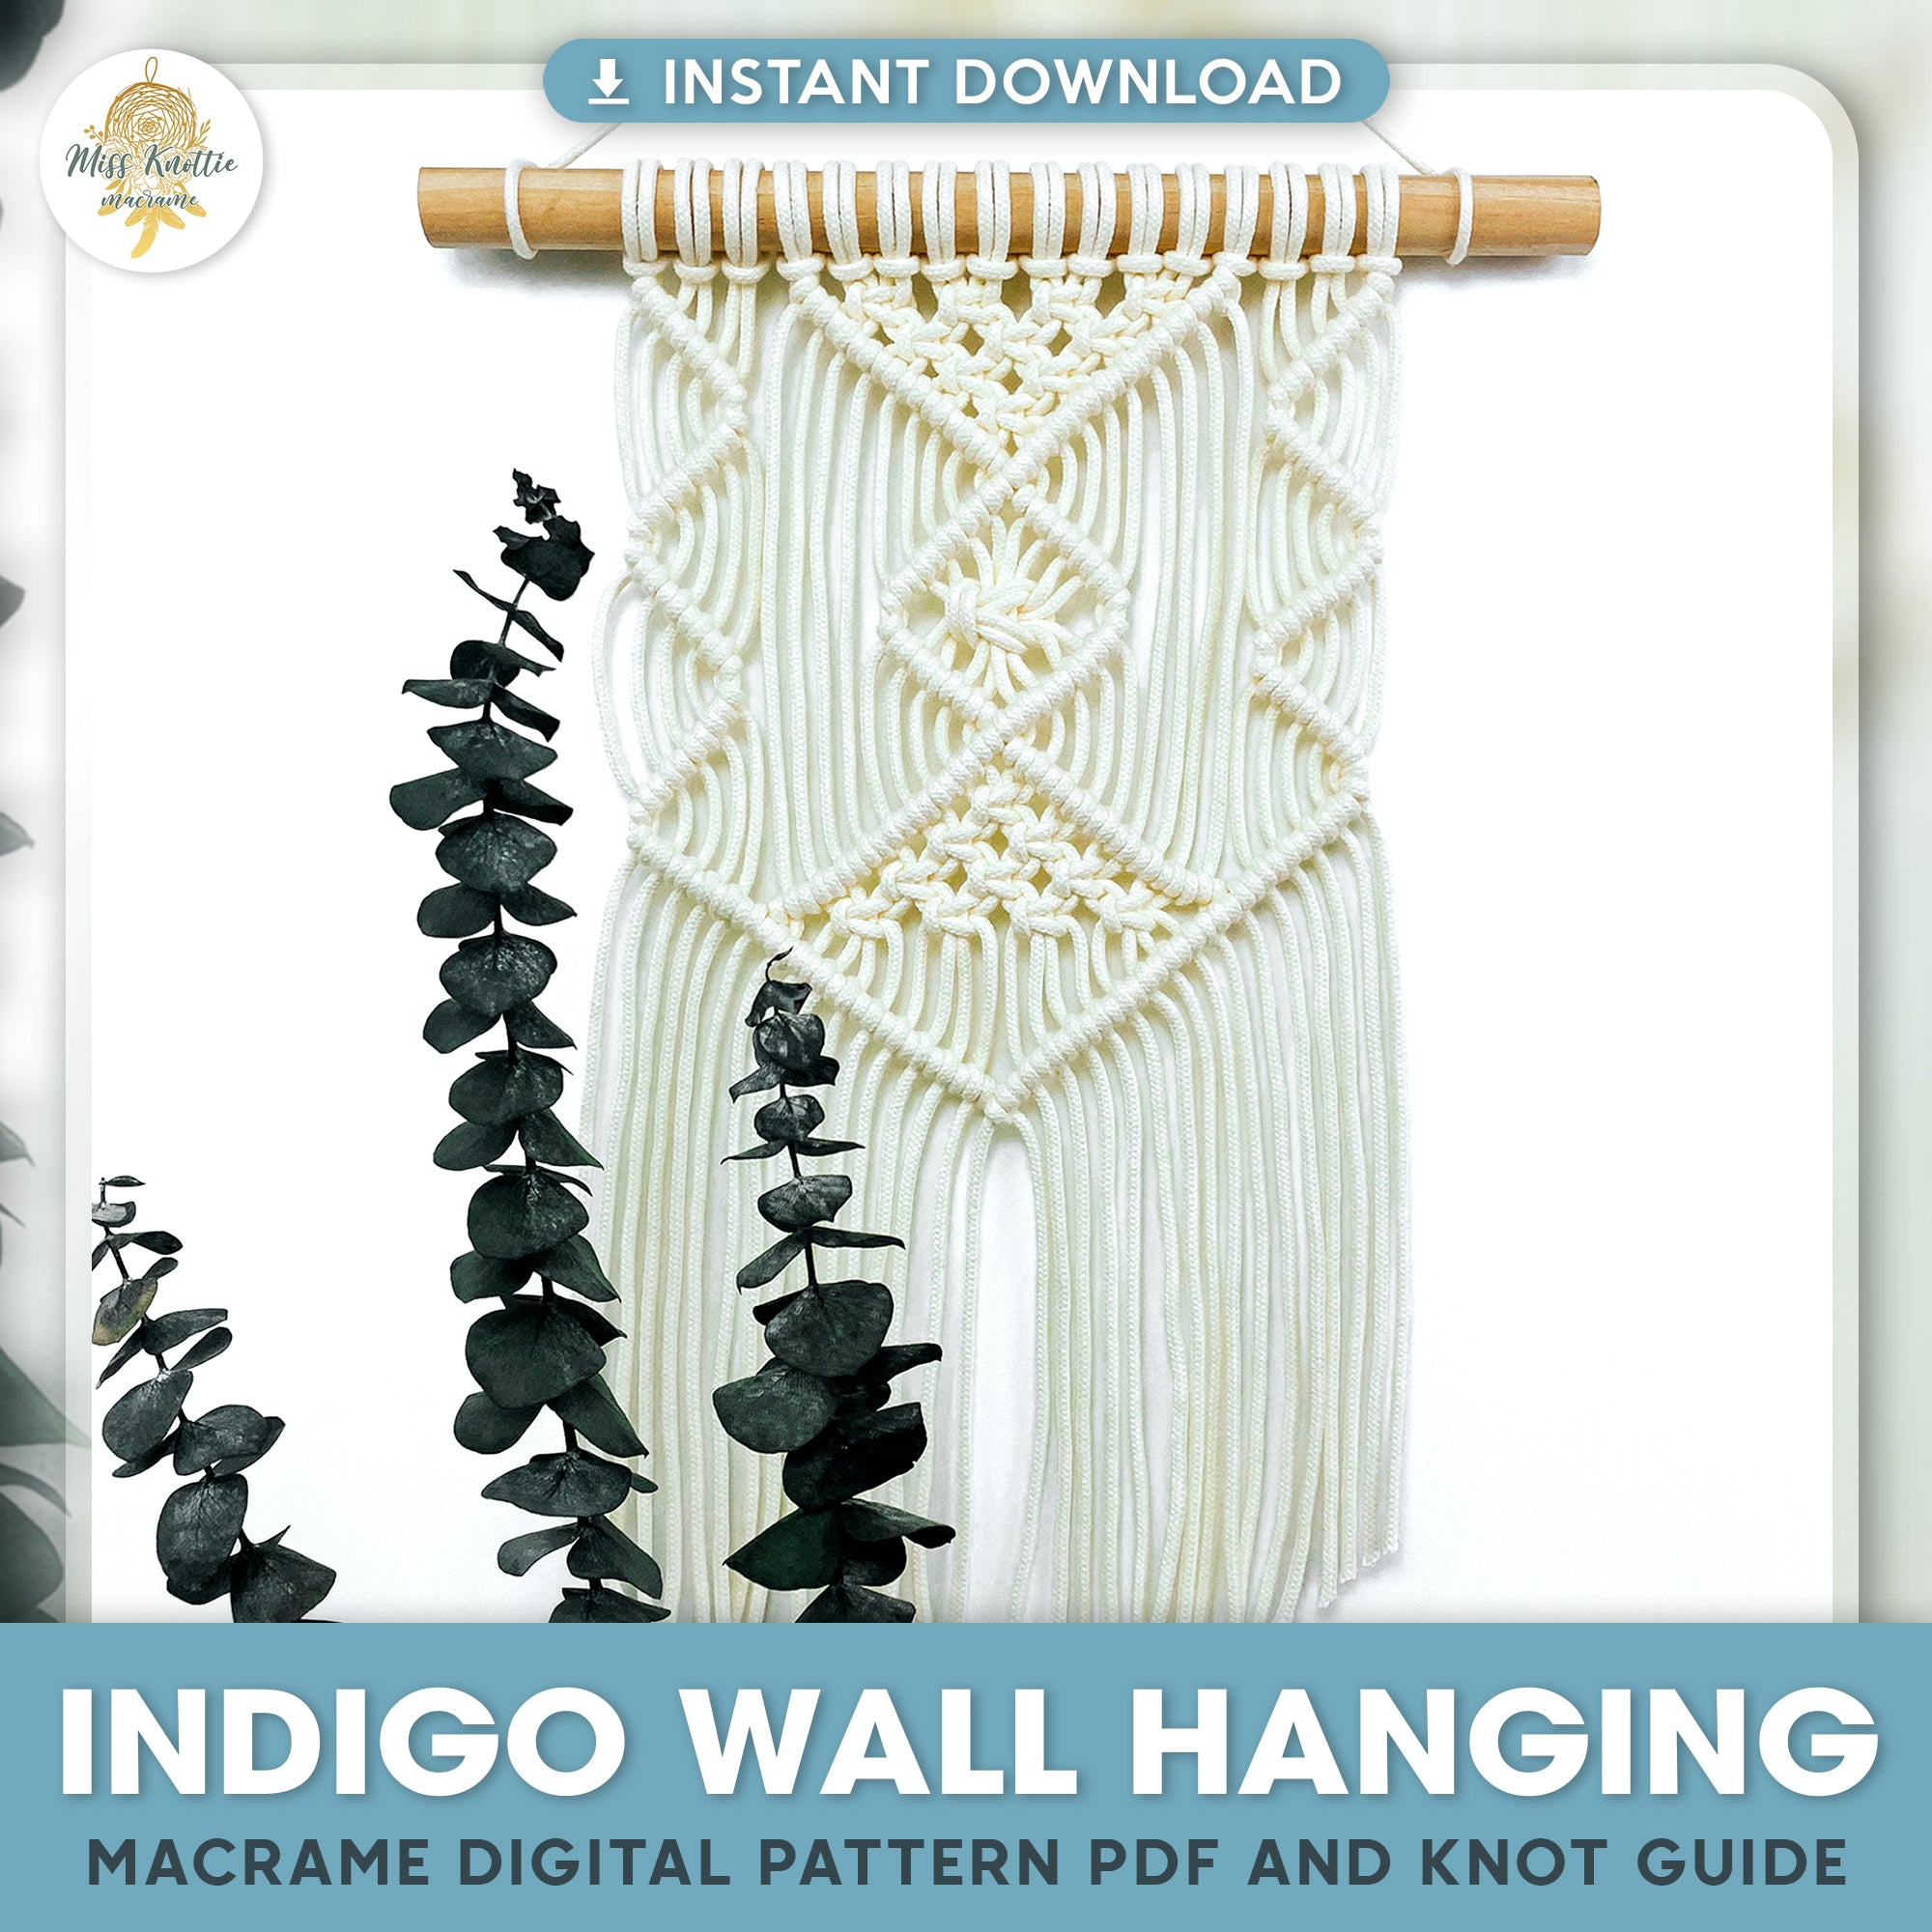 Indigo Wall Hanging - Guia Digital PDF e Knot